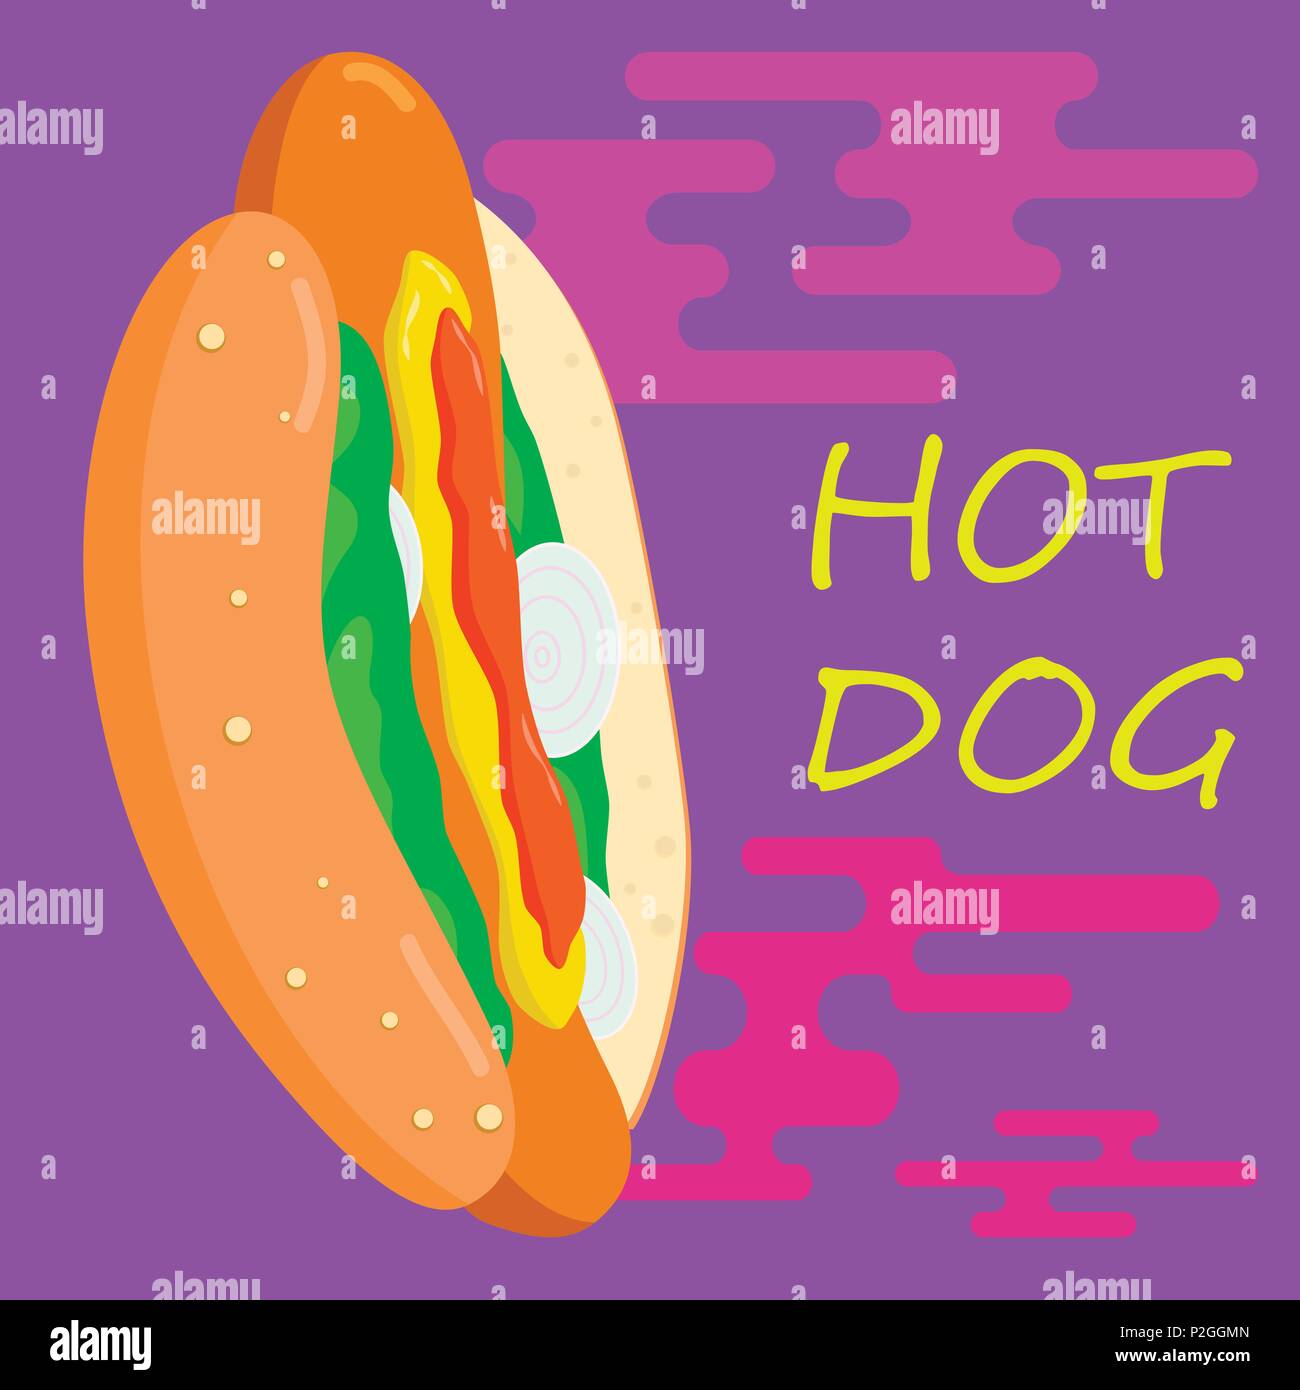 Hot dog poster design. Street food illustration. Stock Vector